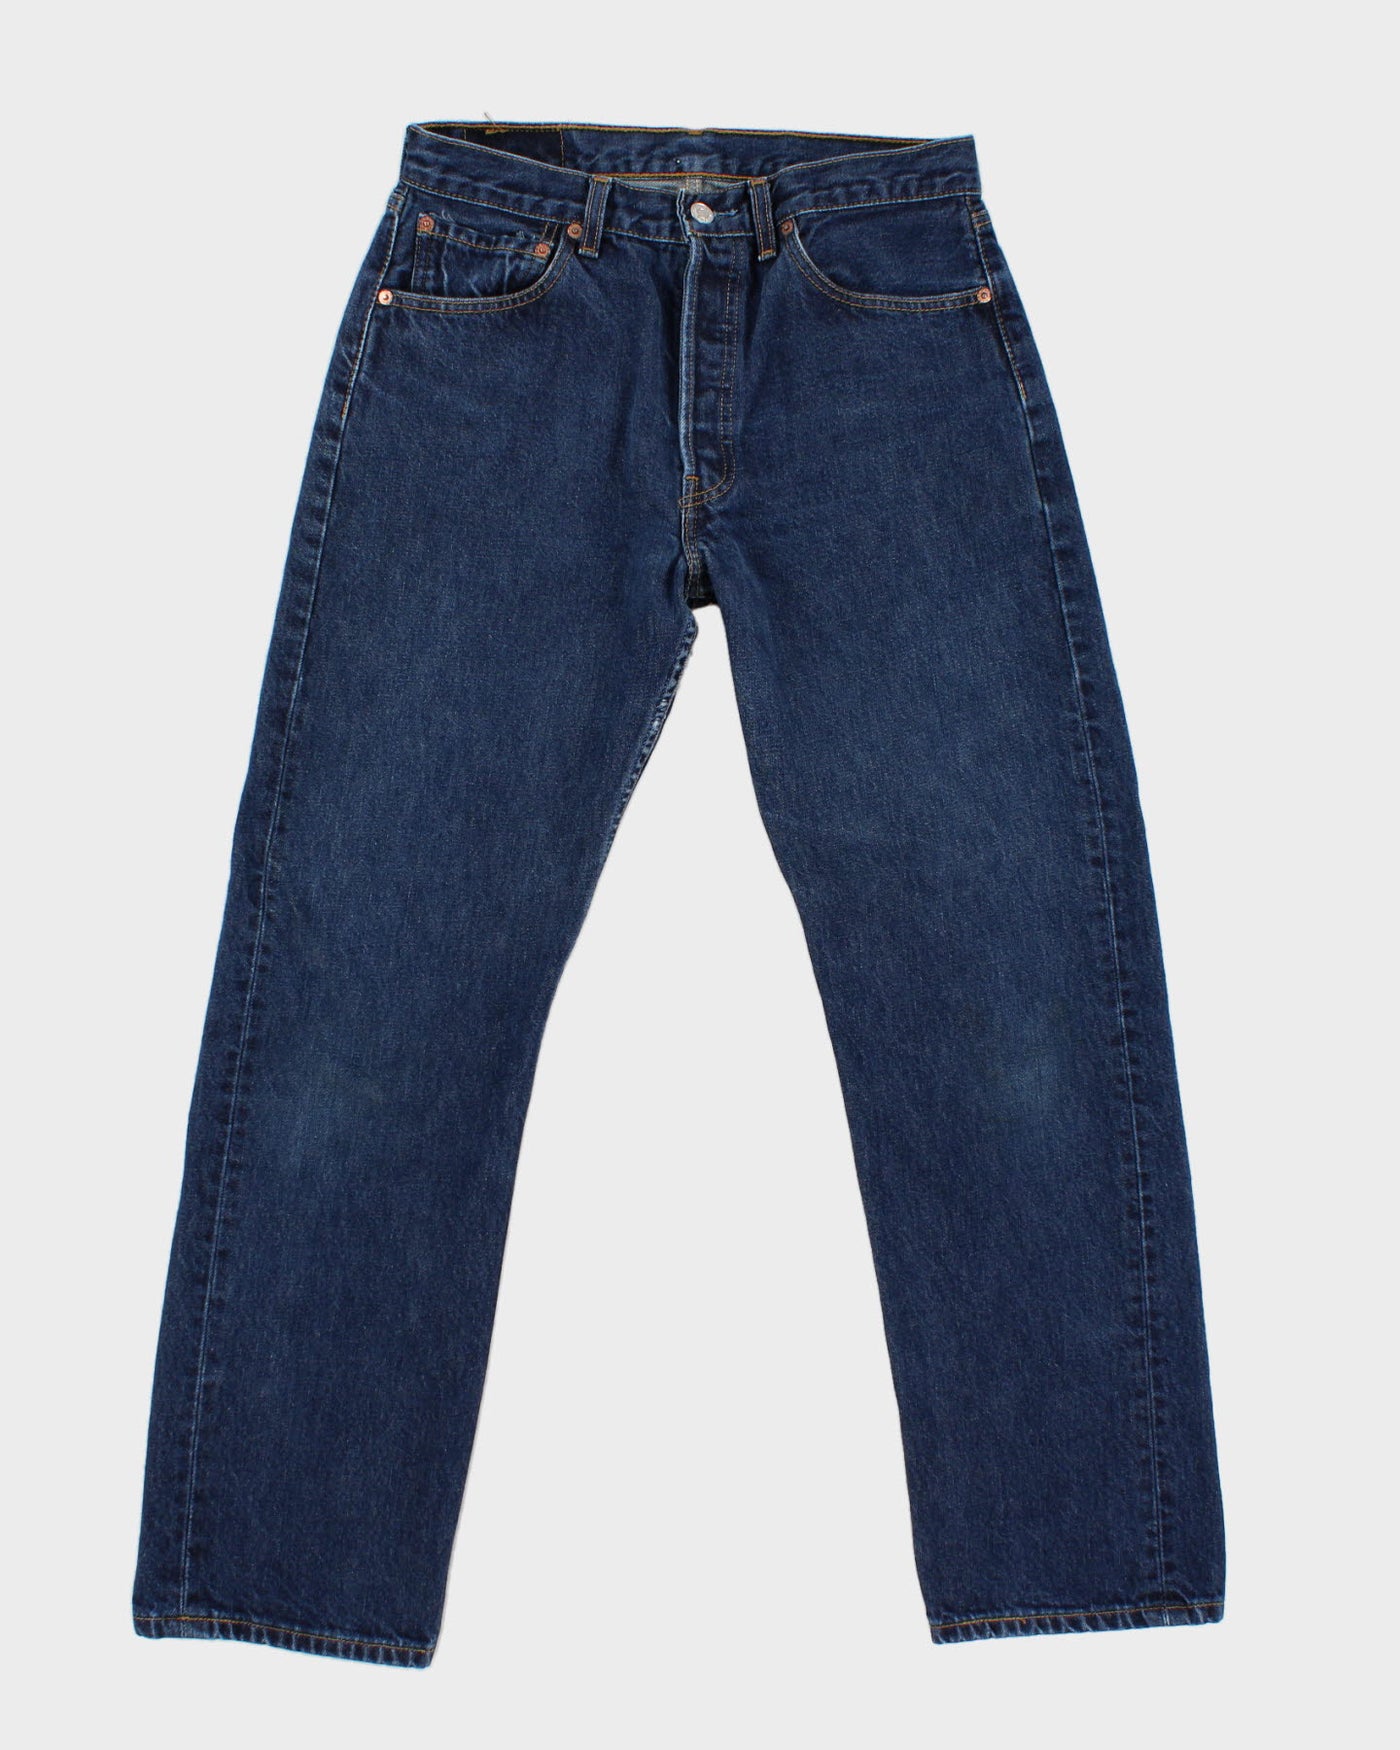 Vintage 90s Levi's Darkwash Denim 501 Jeans - W30 L27